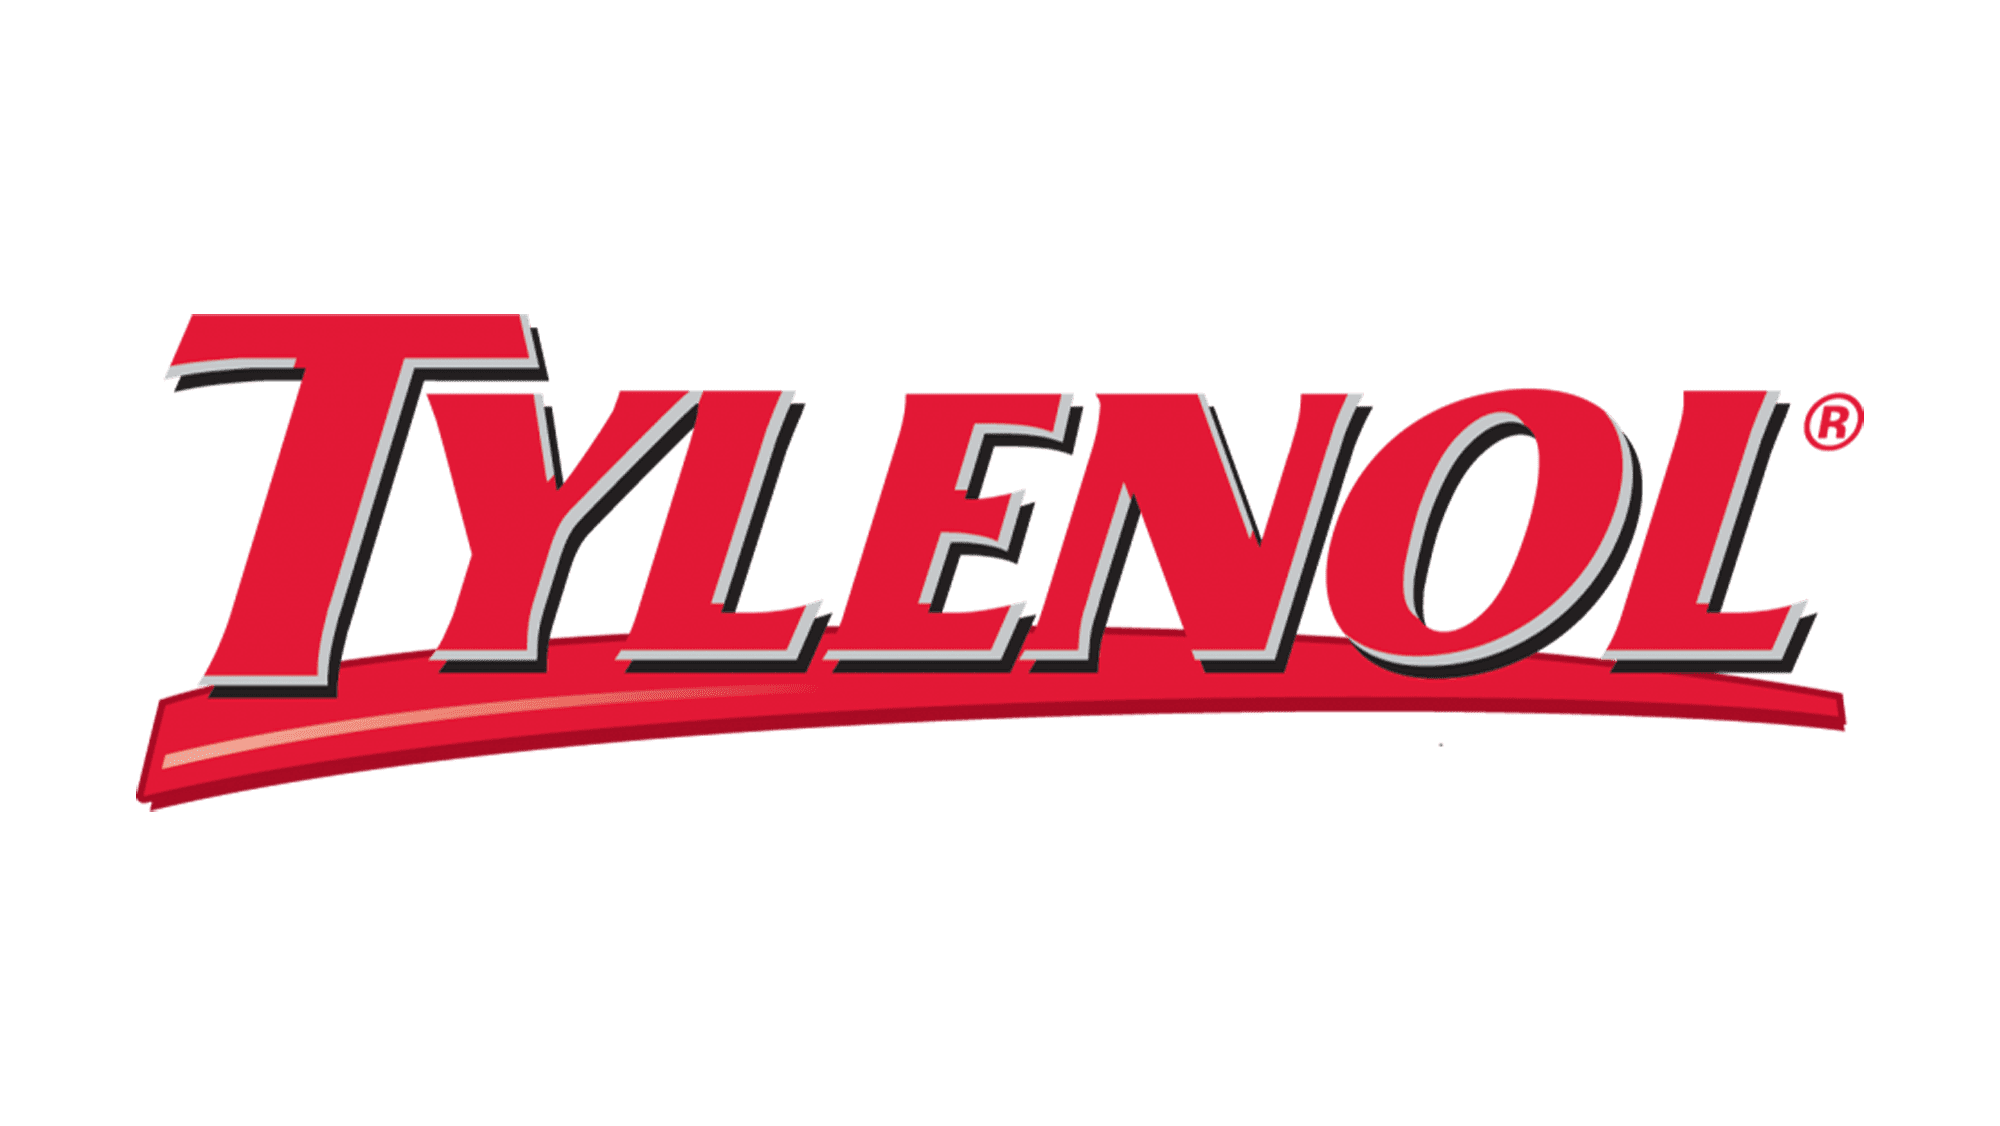 Tylenol Transparent Logo PNG